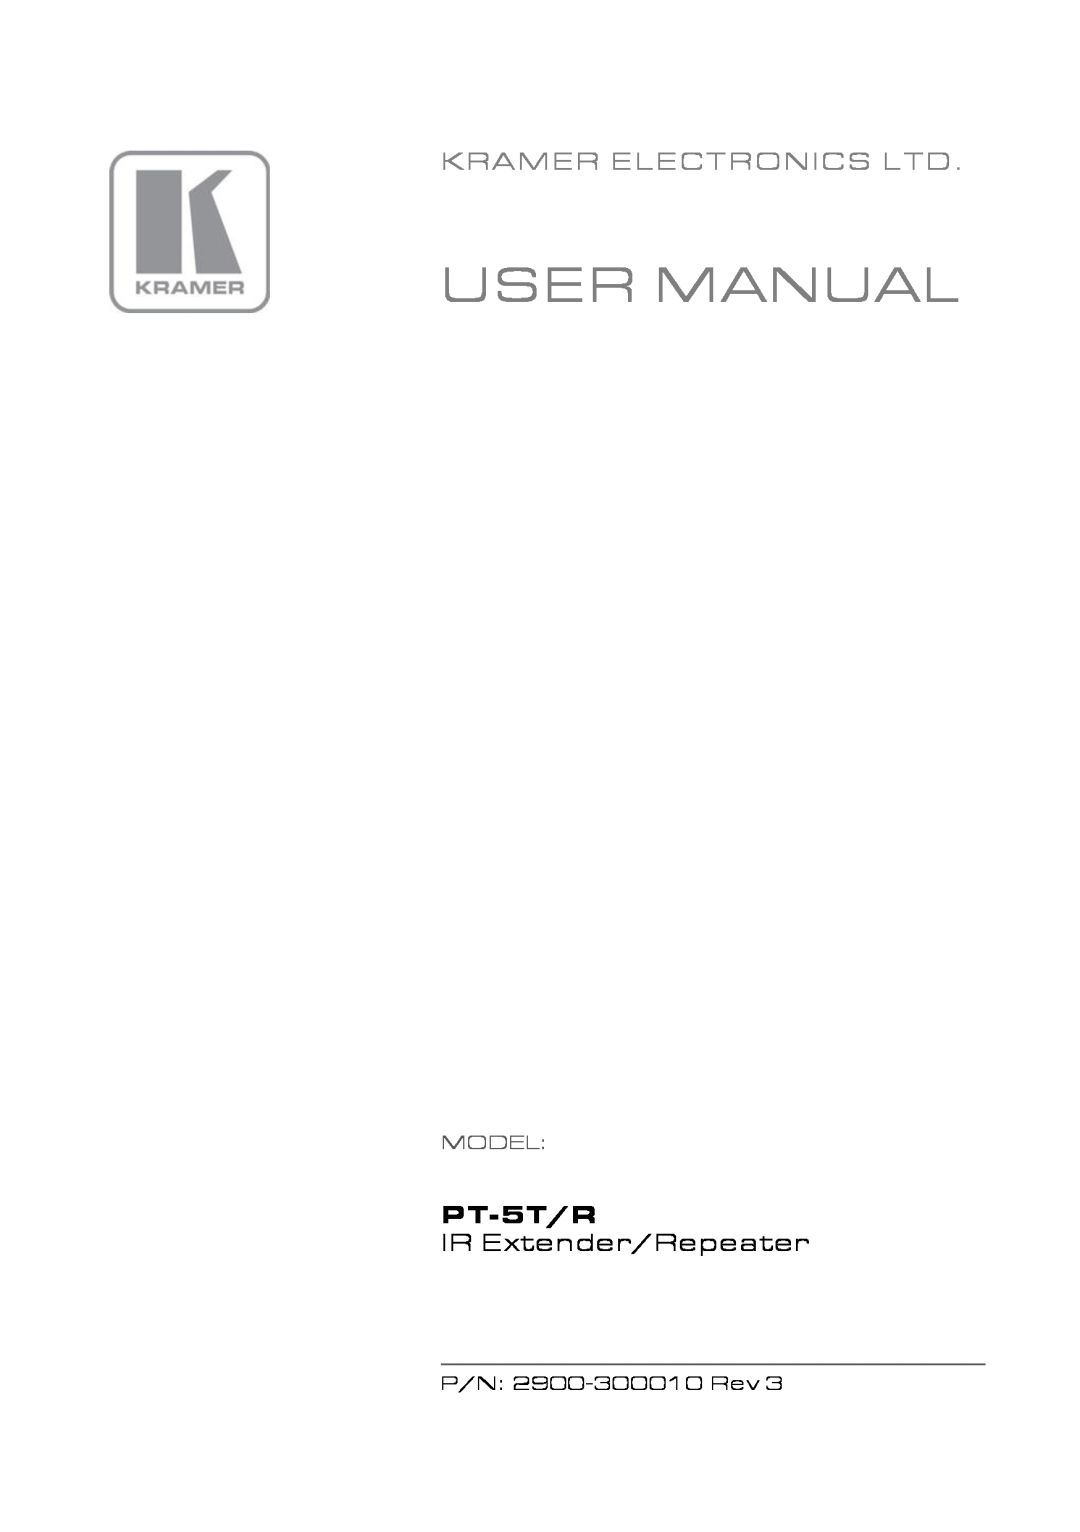 Kramer Electronics user manual PT-5T/R, IR Extender/Repeater, Model 